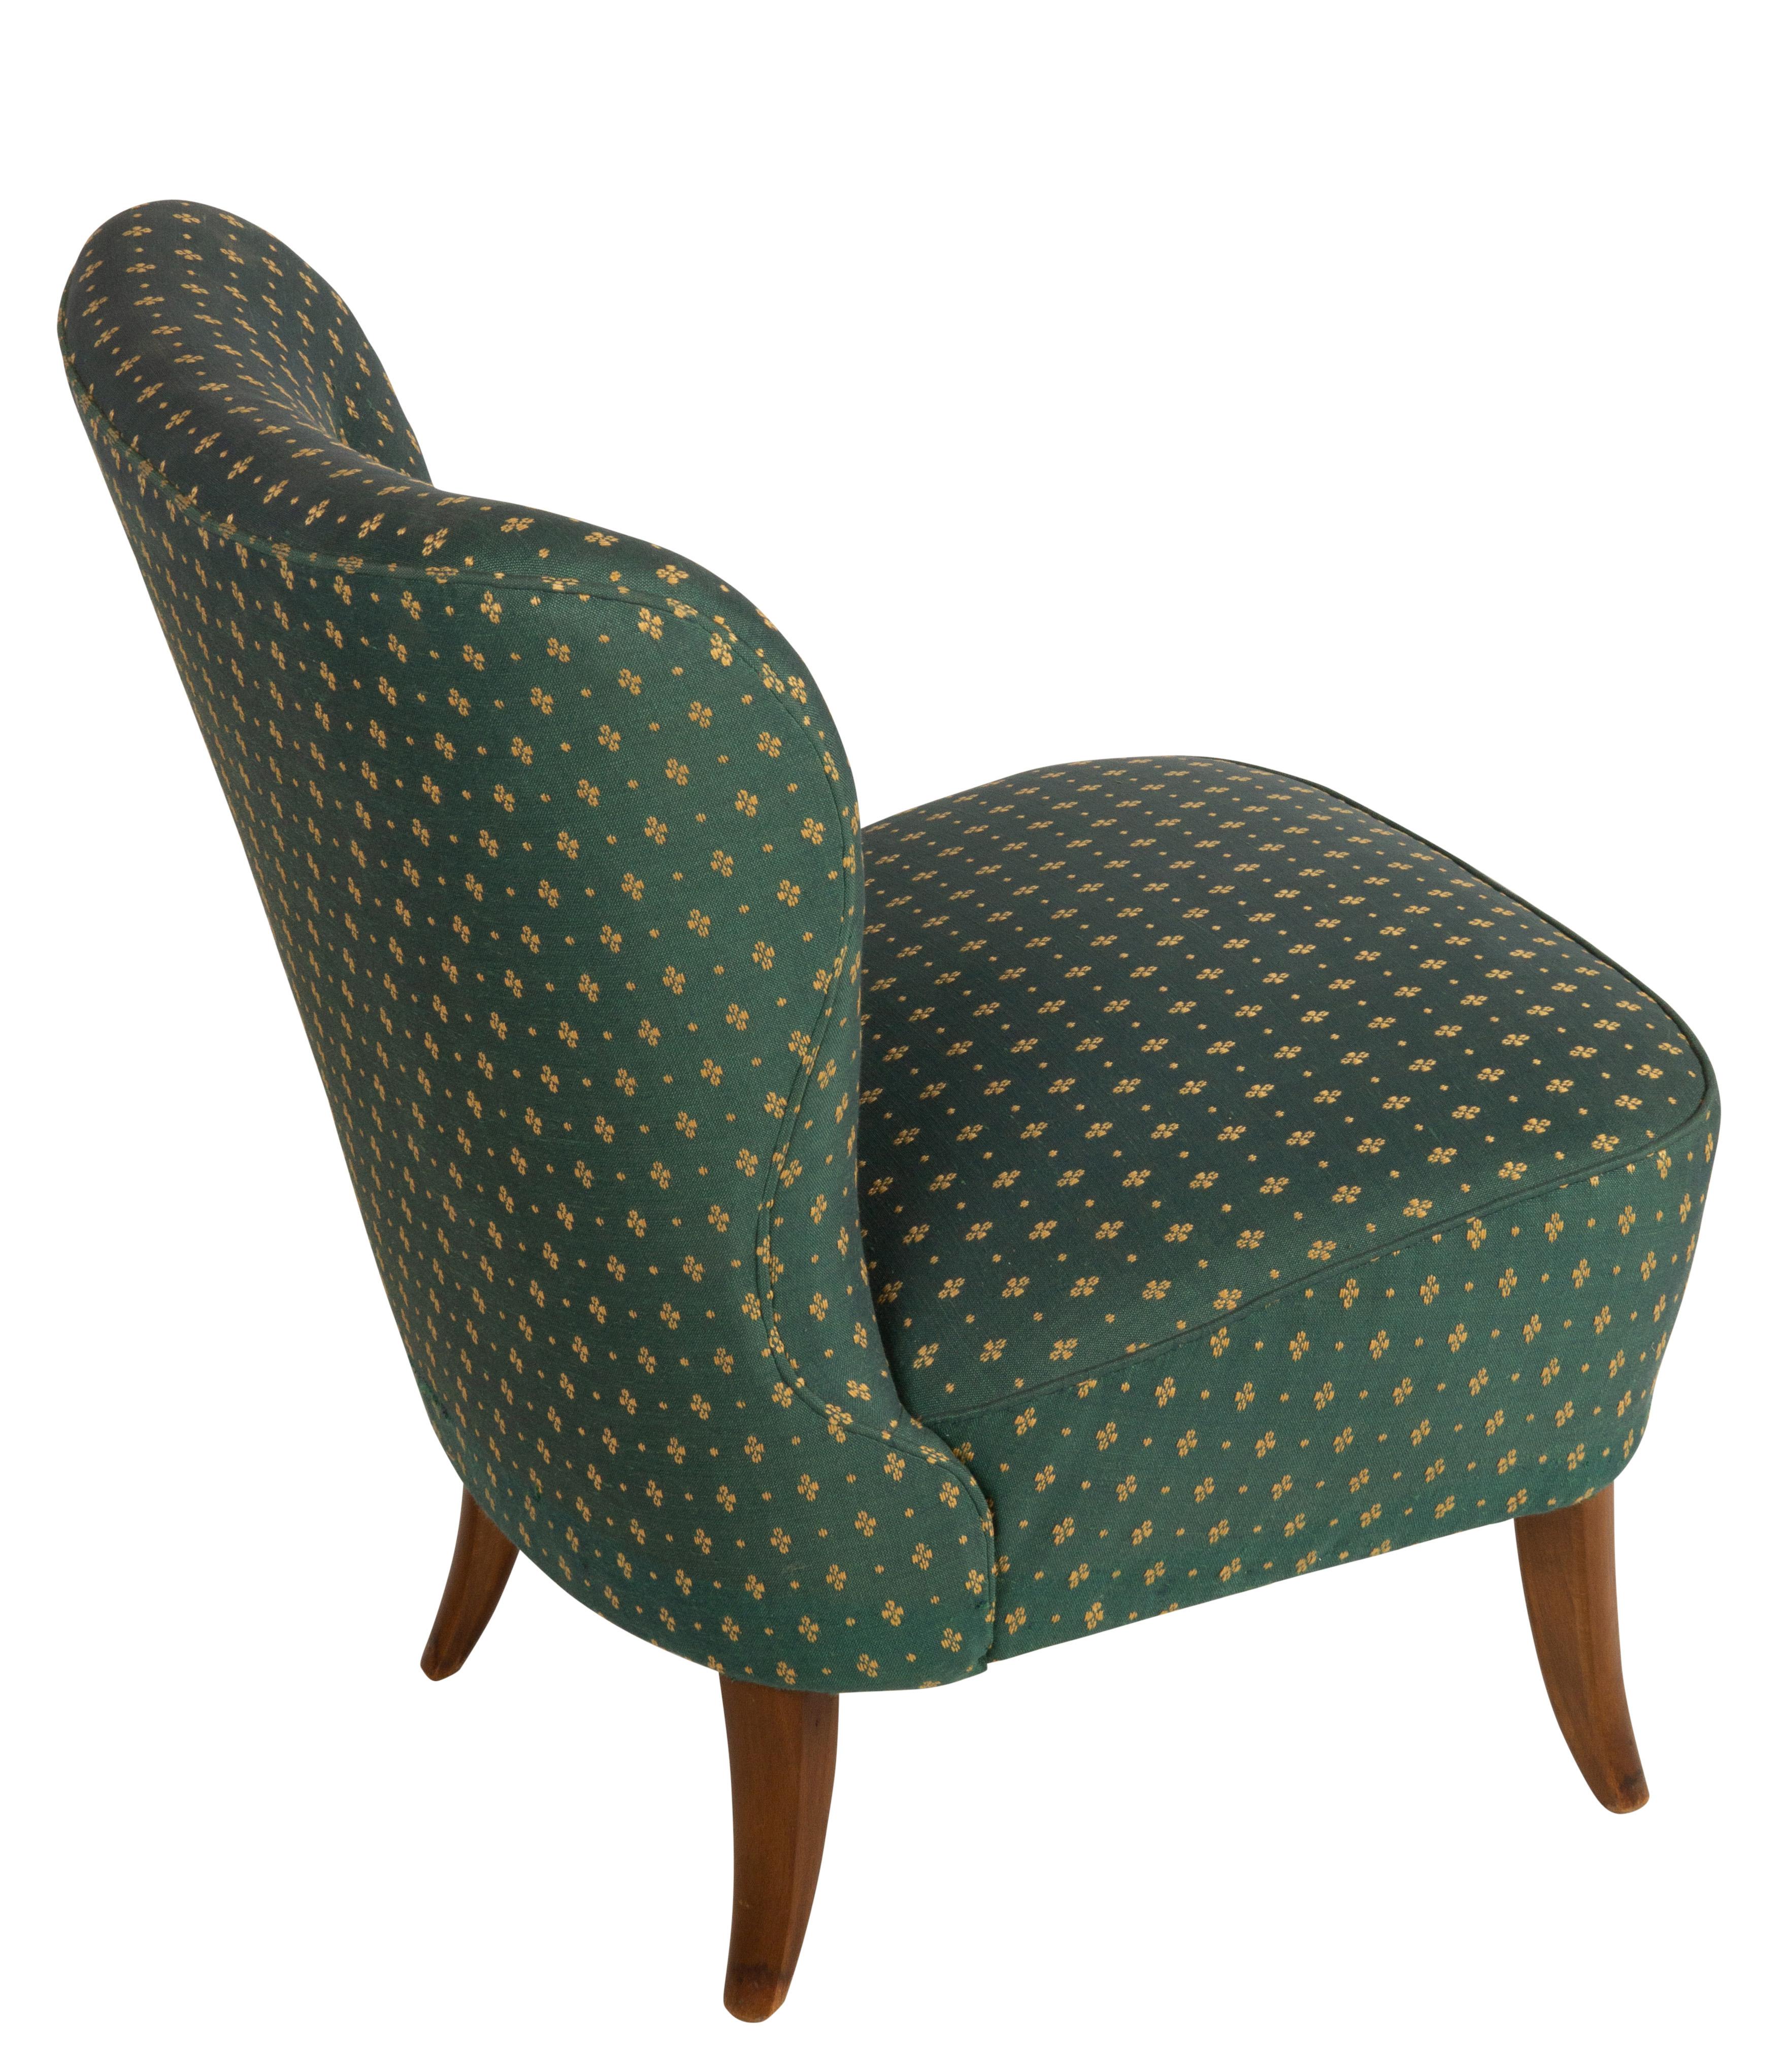 Dutch Theo Ruth for Artifort, Modern Lounge Chair